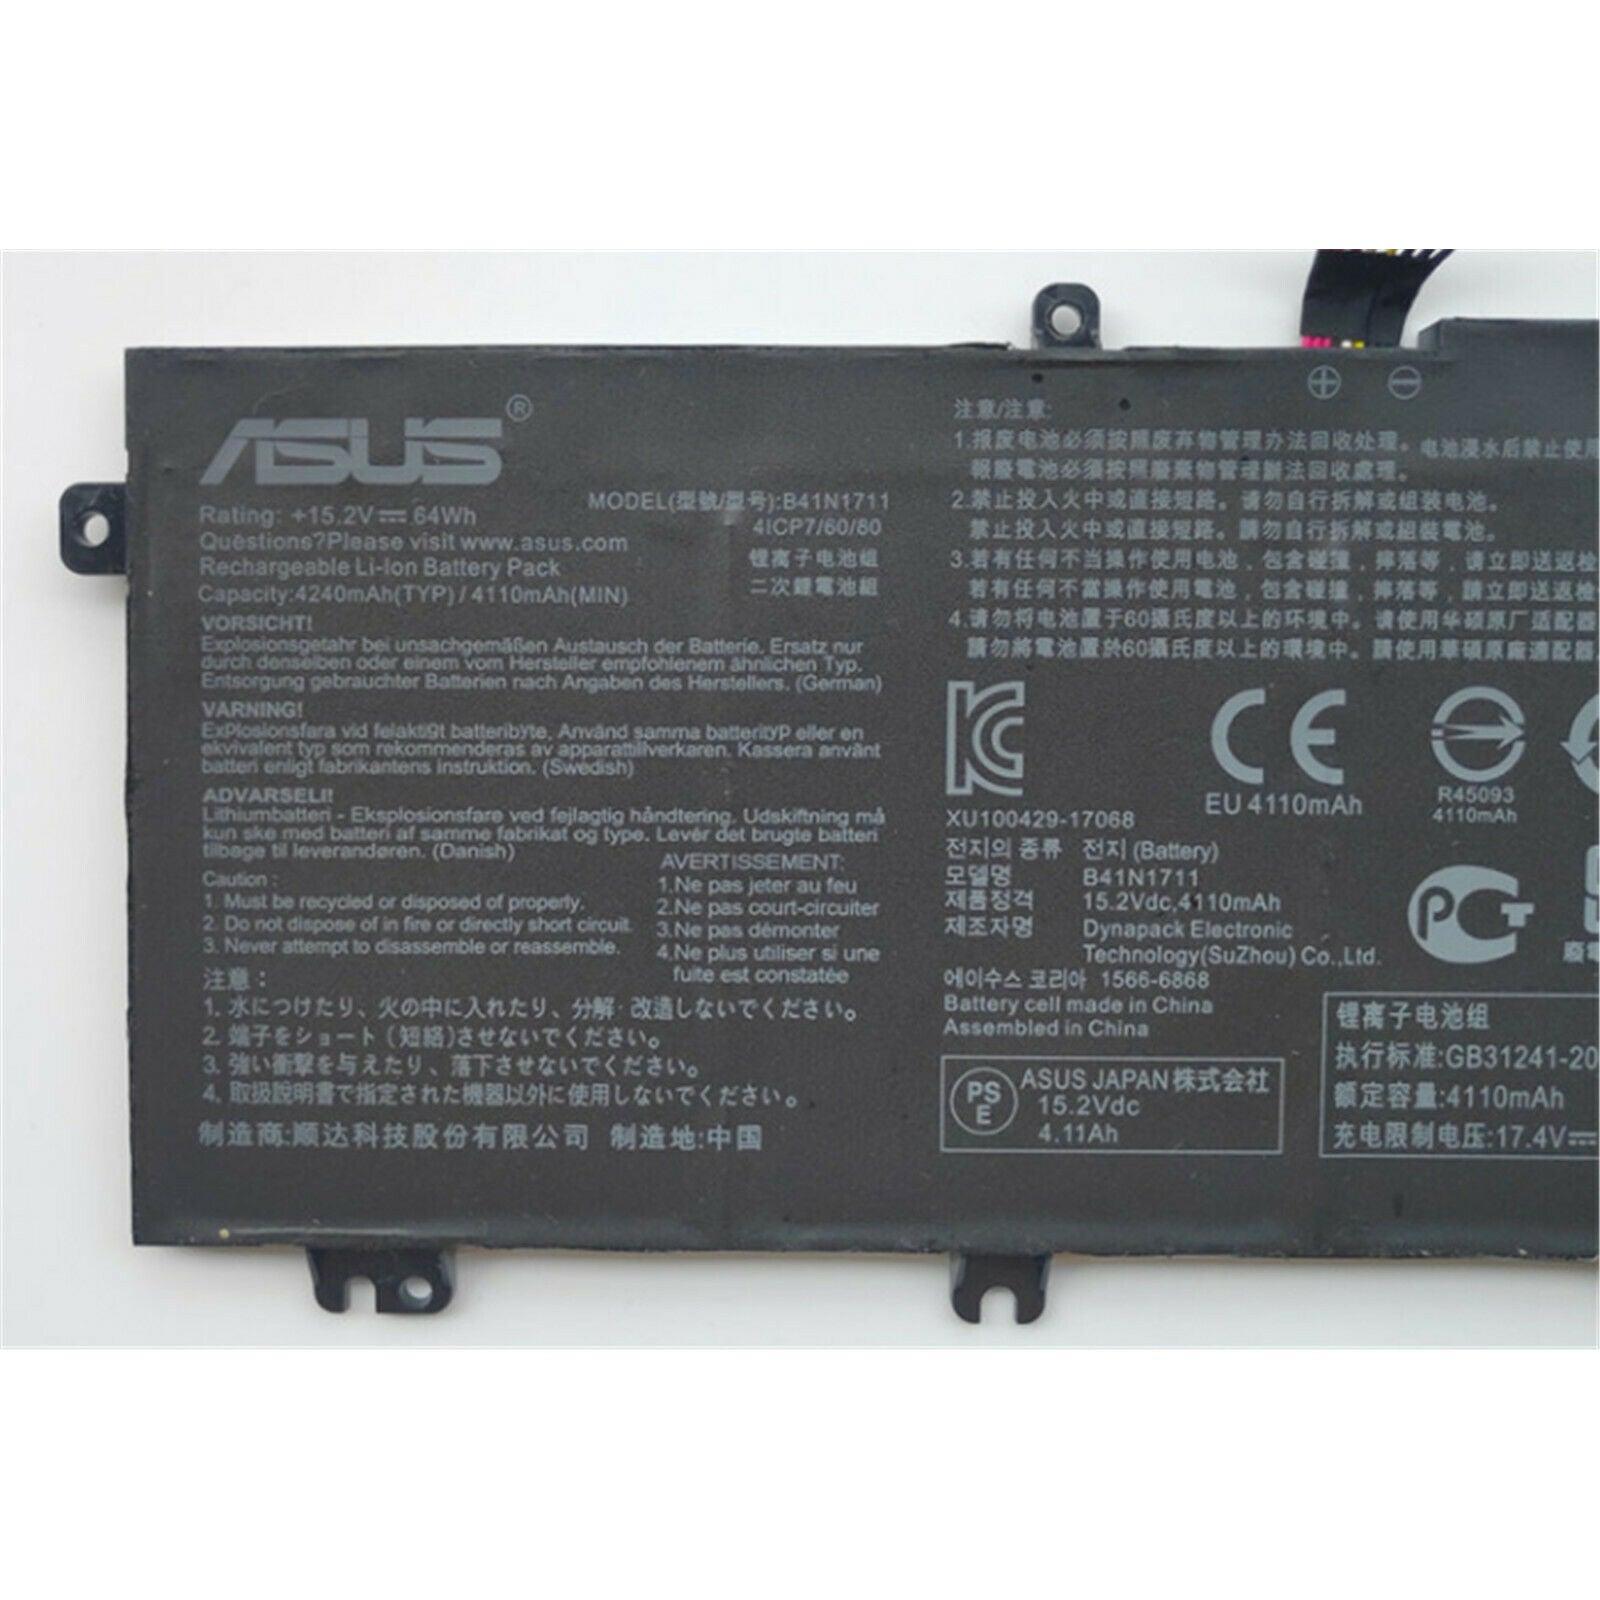 B41N1711 Original Laptop Battery for Asus ROG GL503VD GL703VD FX503VM FX63VD (Long Cable)